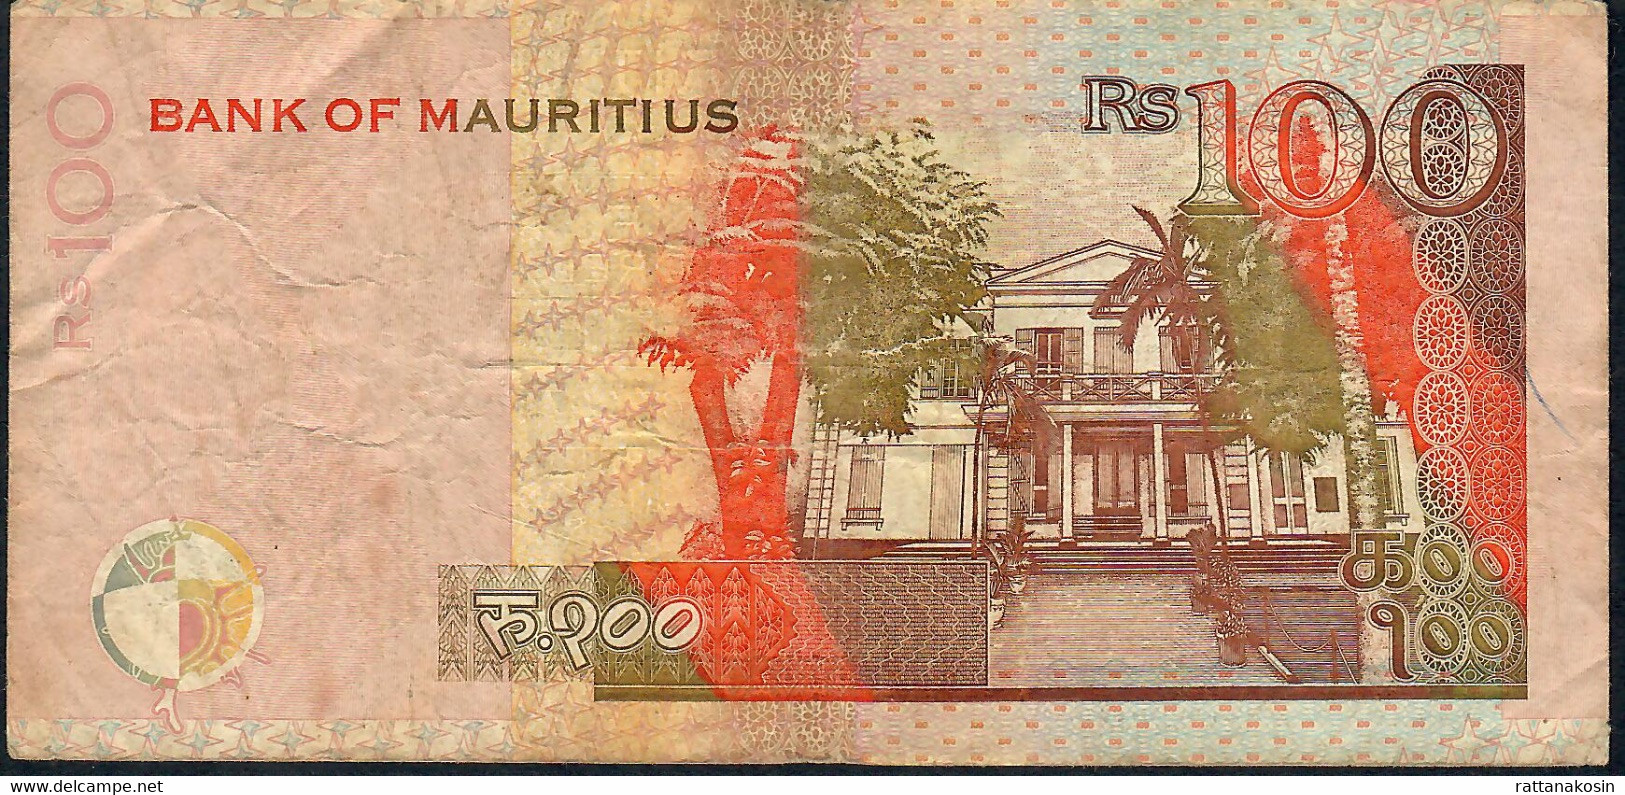 MAURITIUS P51b 100 RUPEES 2001 #BB FINE - Mauricio